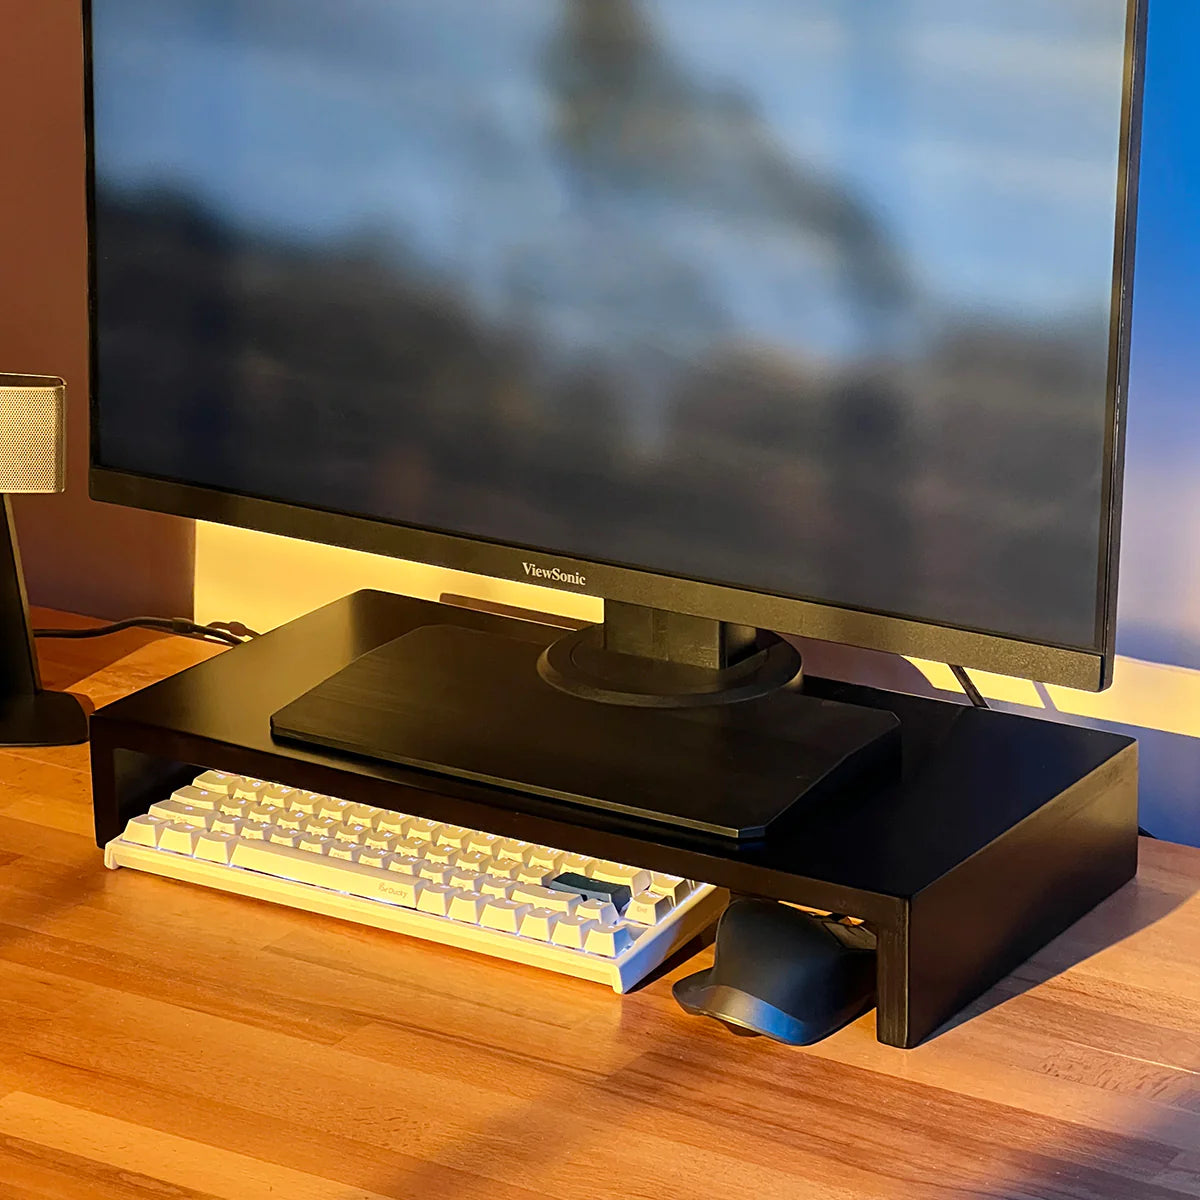 Woodsy Monitor Stand Riser for Desk (small) - Desk Organizer